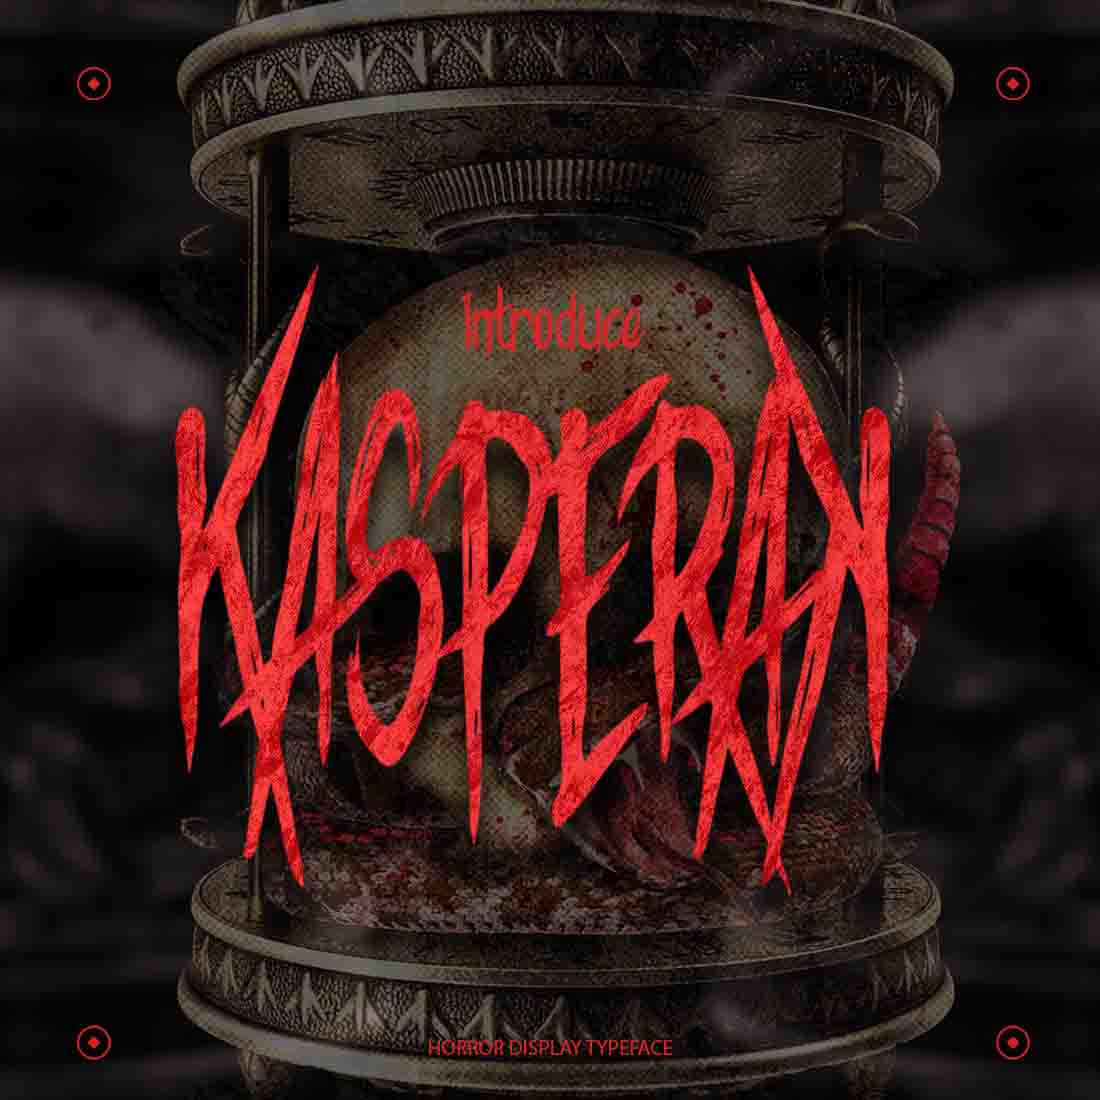 Kasperak - Horror Display Typeface main cover.